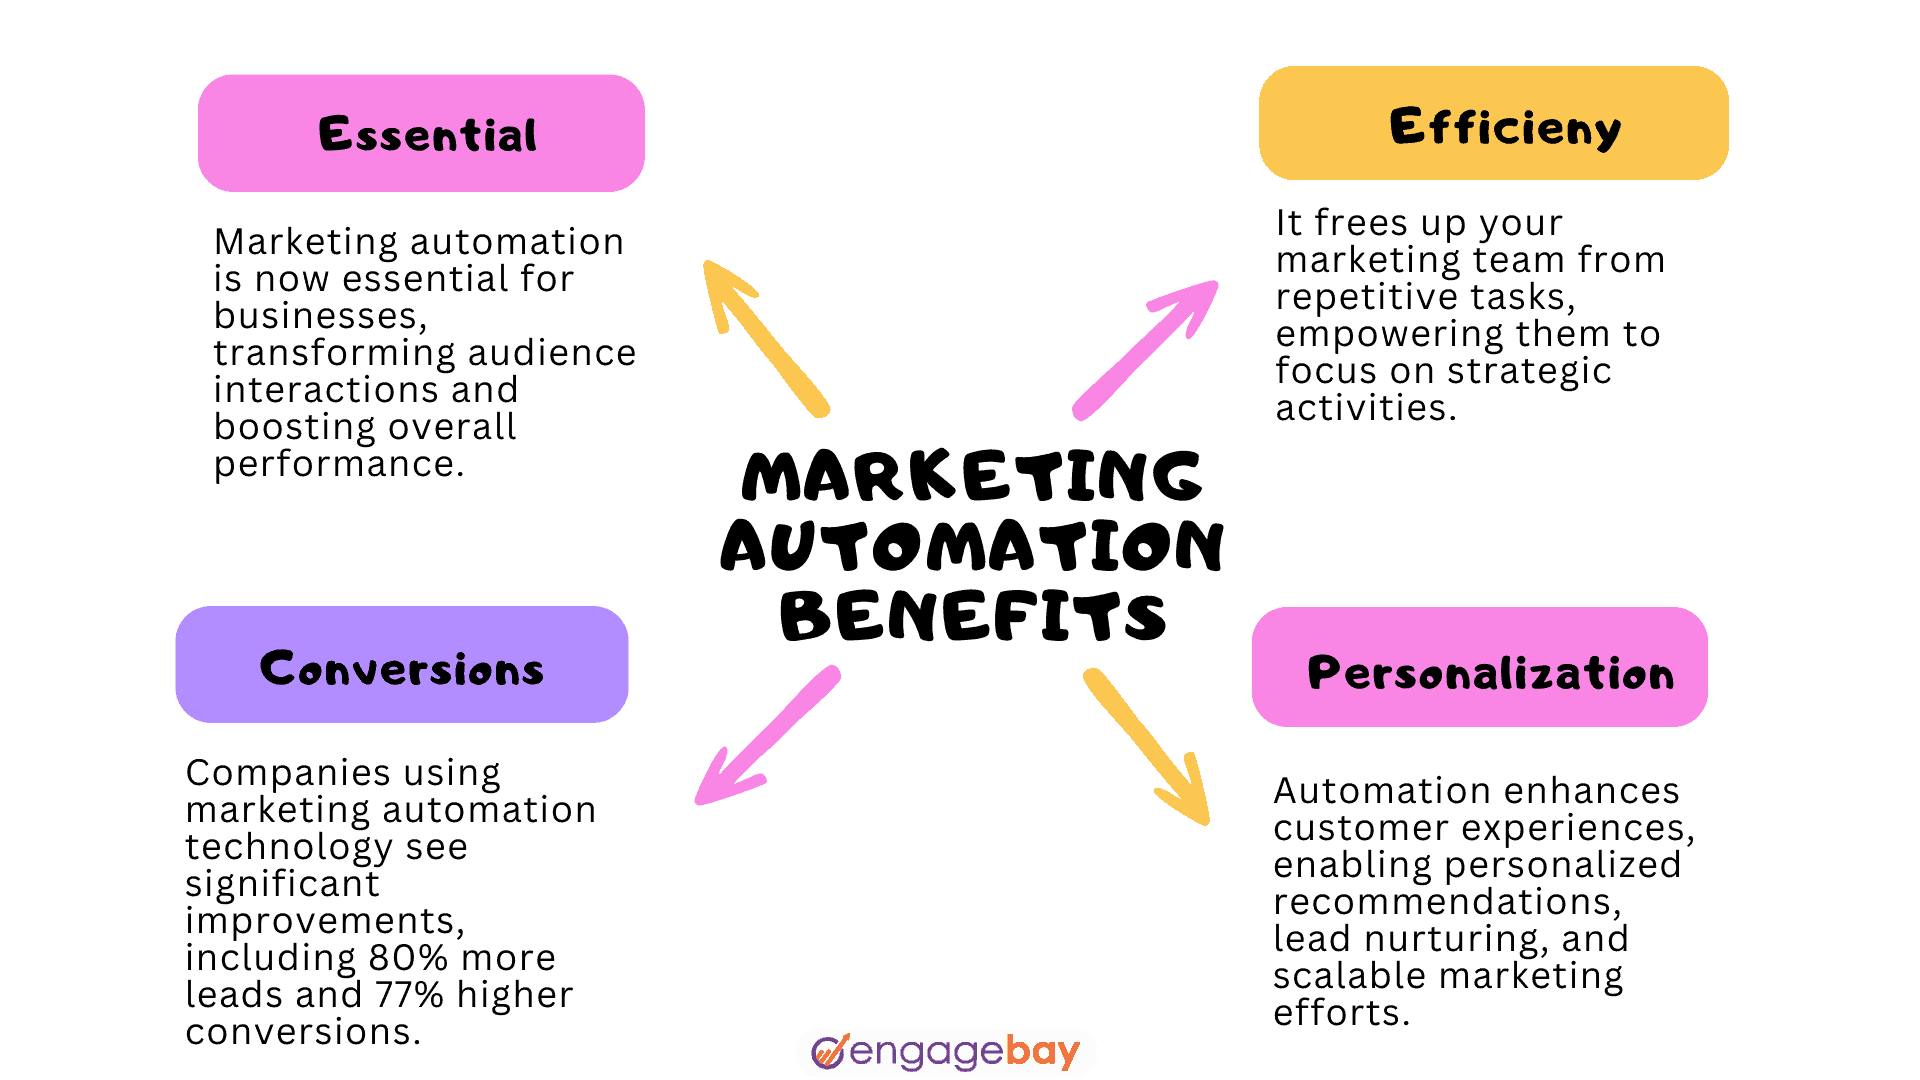 Benefits of marketing automation